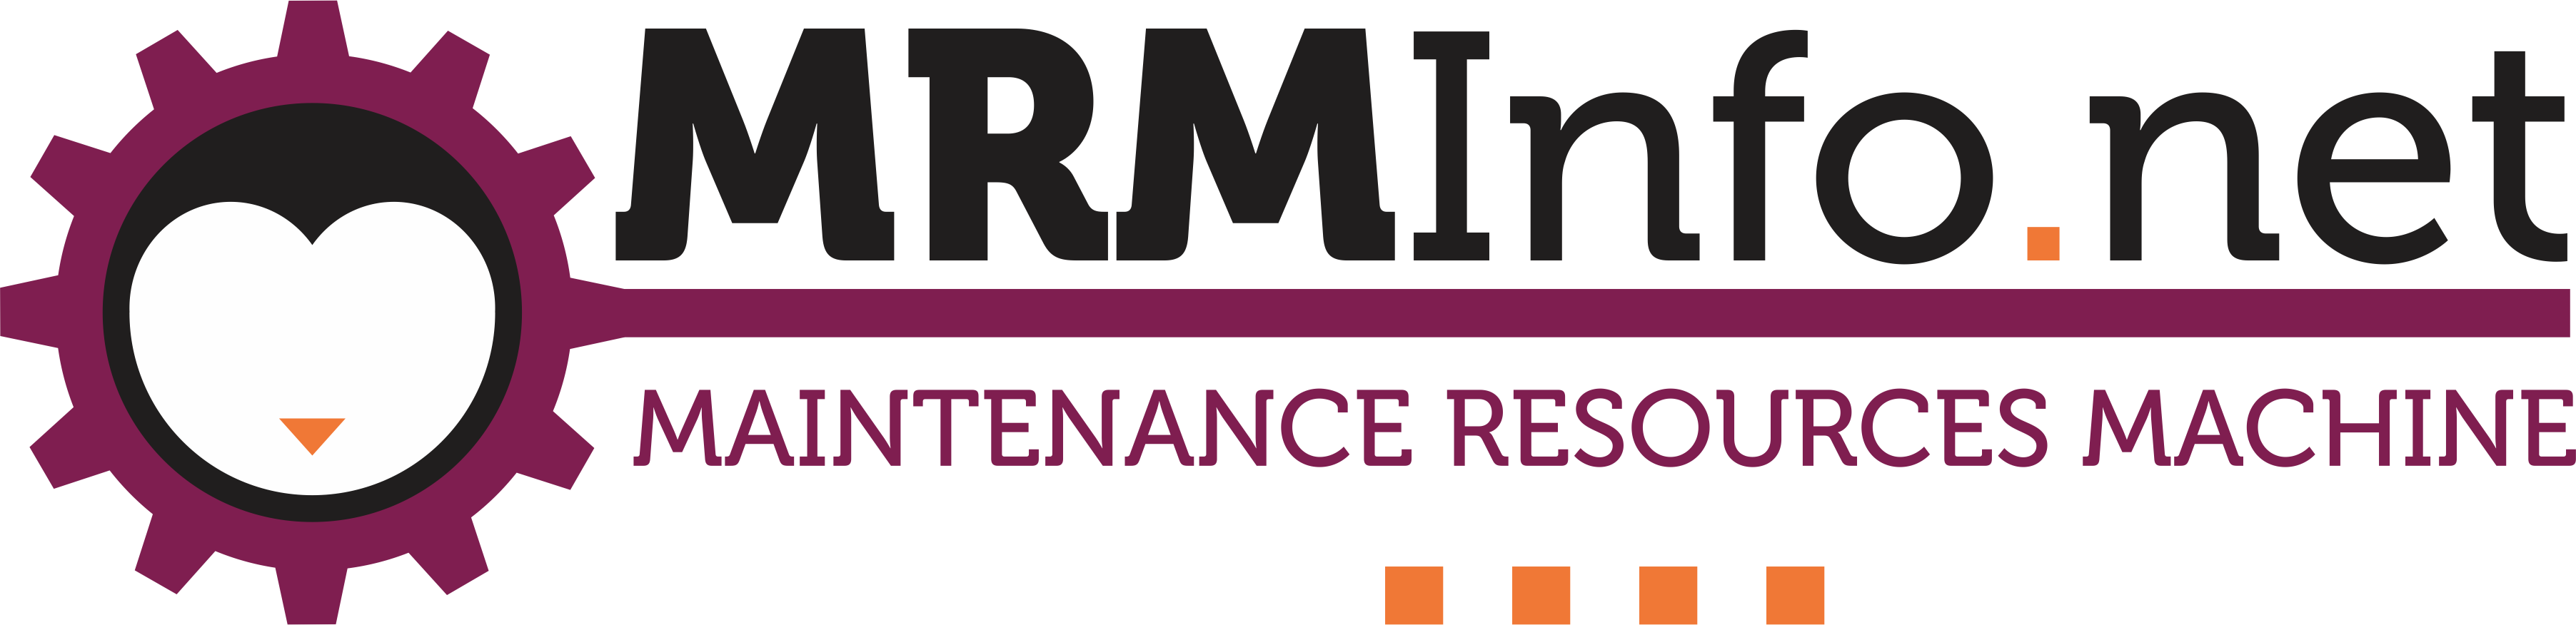 MRMInfo.net – Maintenance Resources Machine